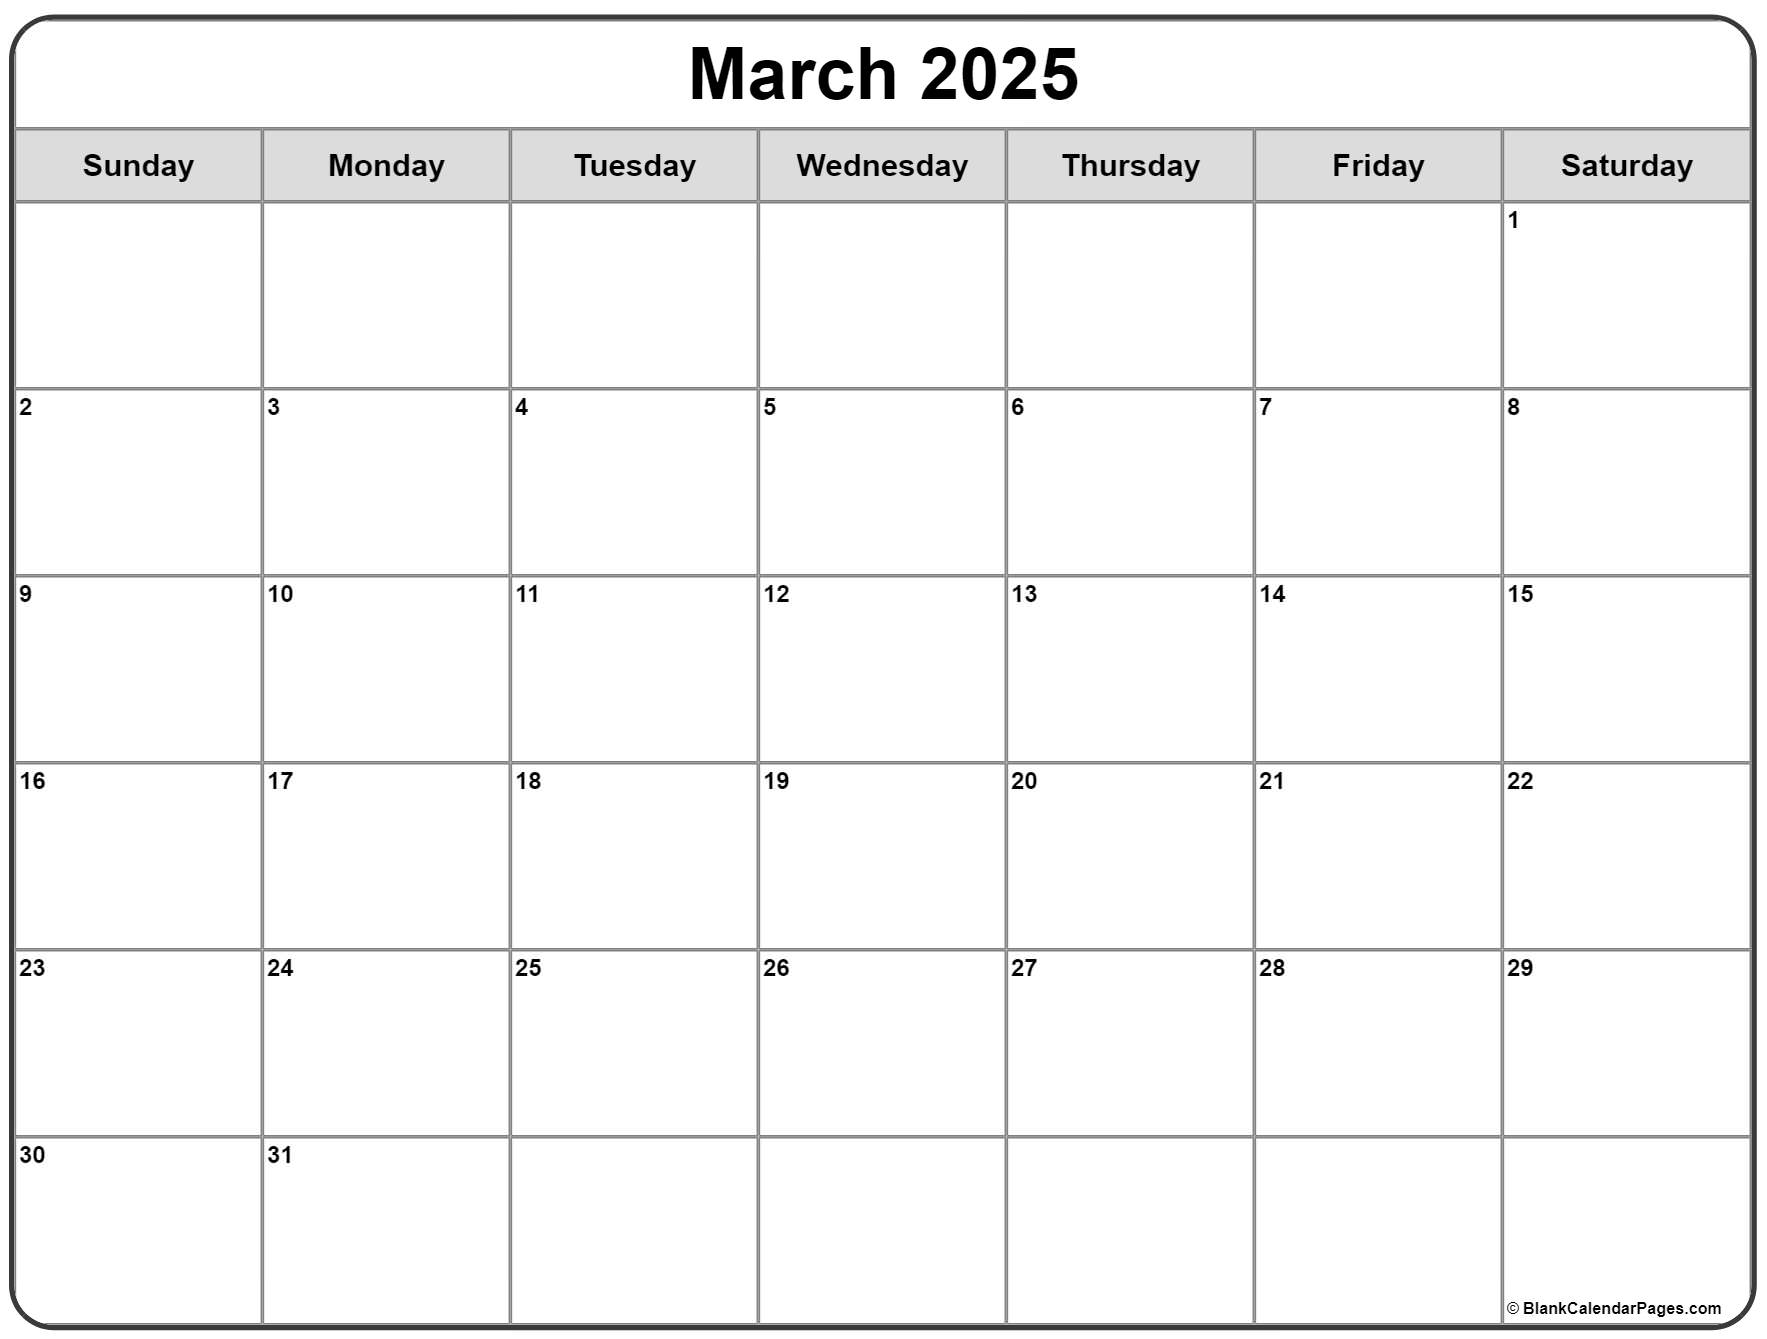 March 2025 calendar free printable calendar